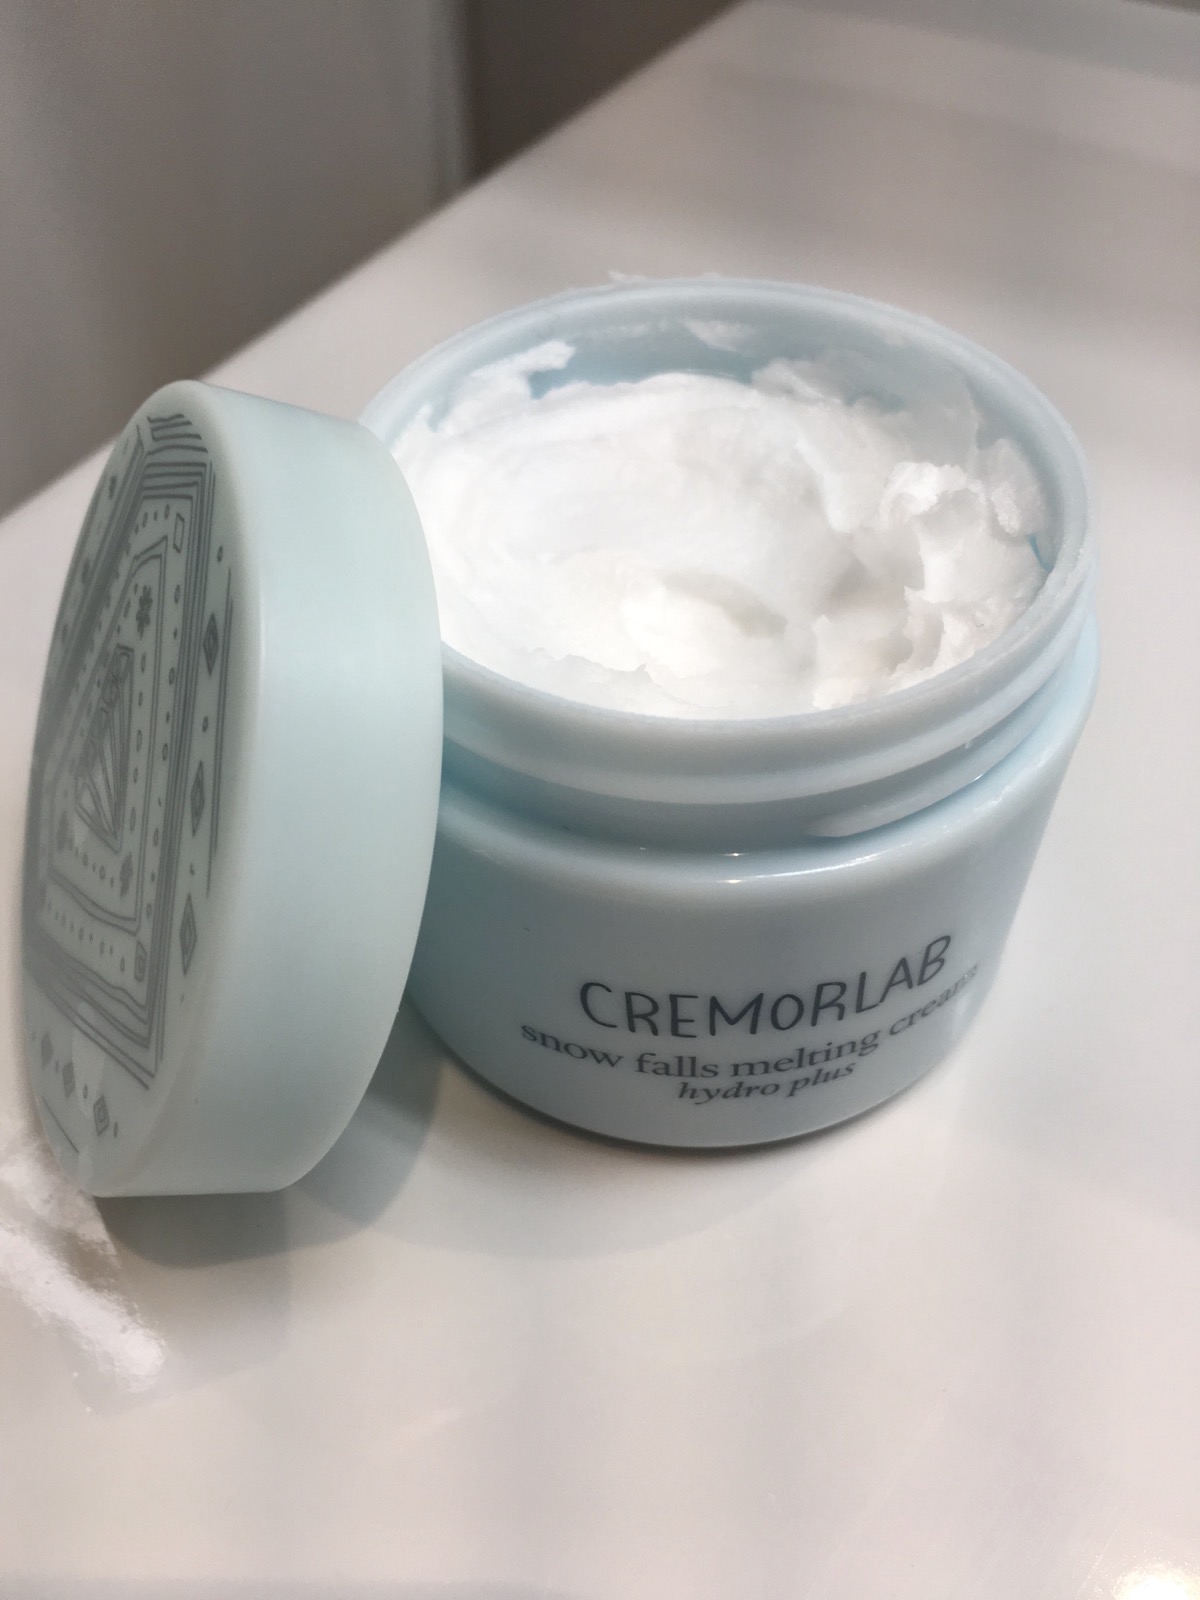 Cremorlab Hydro Plus Snow Falls Melting Cream, skönhetssnack.se IMG_9002